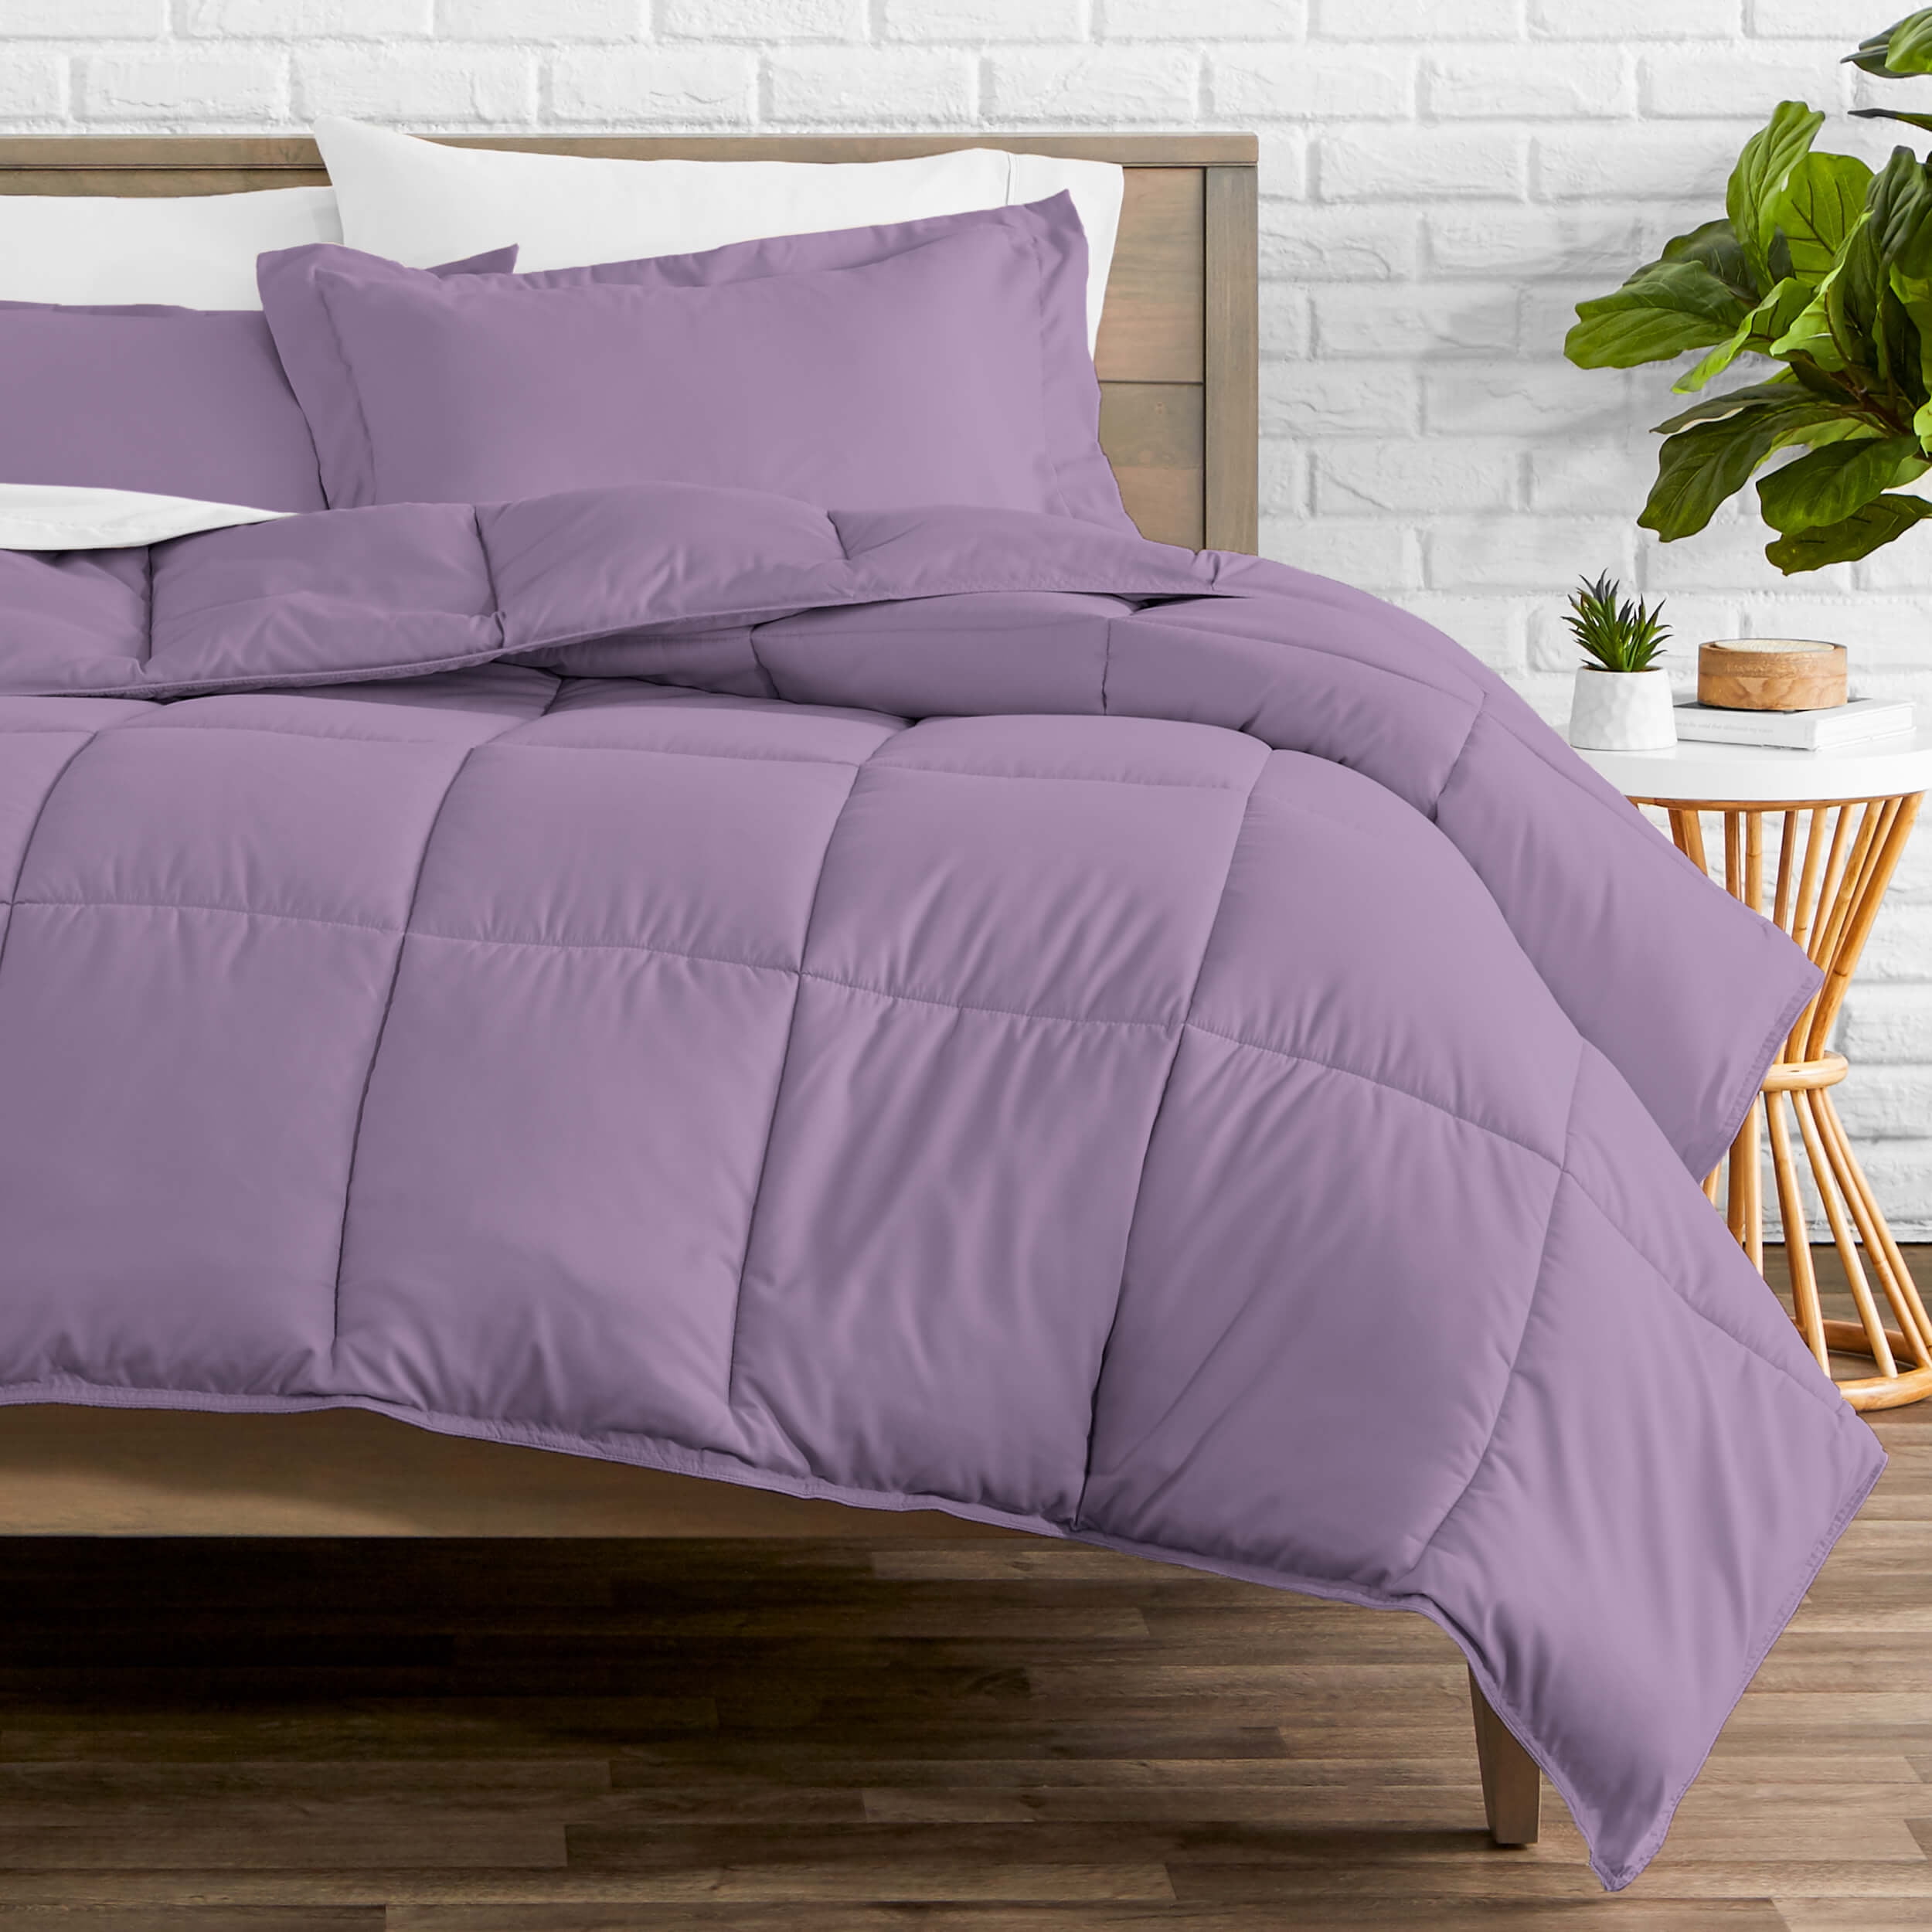 GREY GOOSE Glamorous Goose Down Alternative Bedspread+Sheet Set Super King Size Grey Solid 